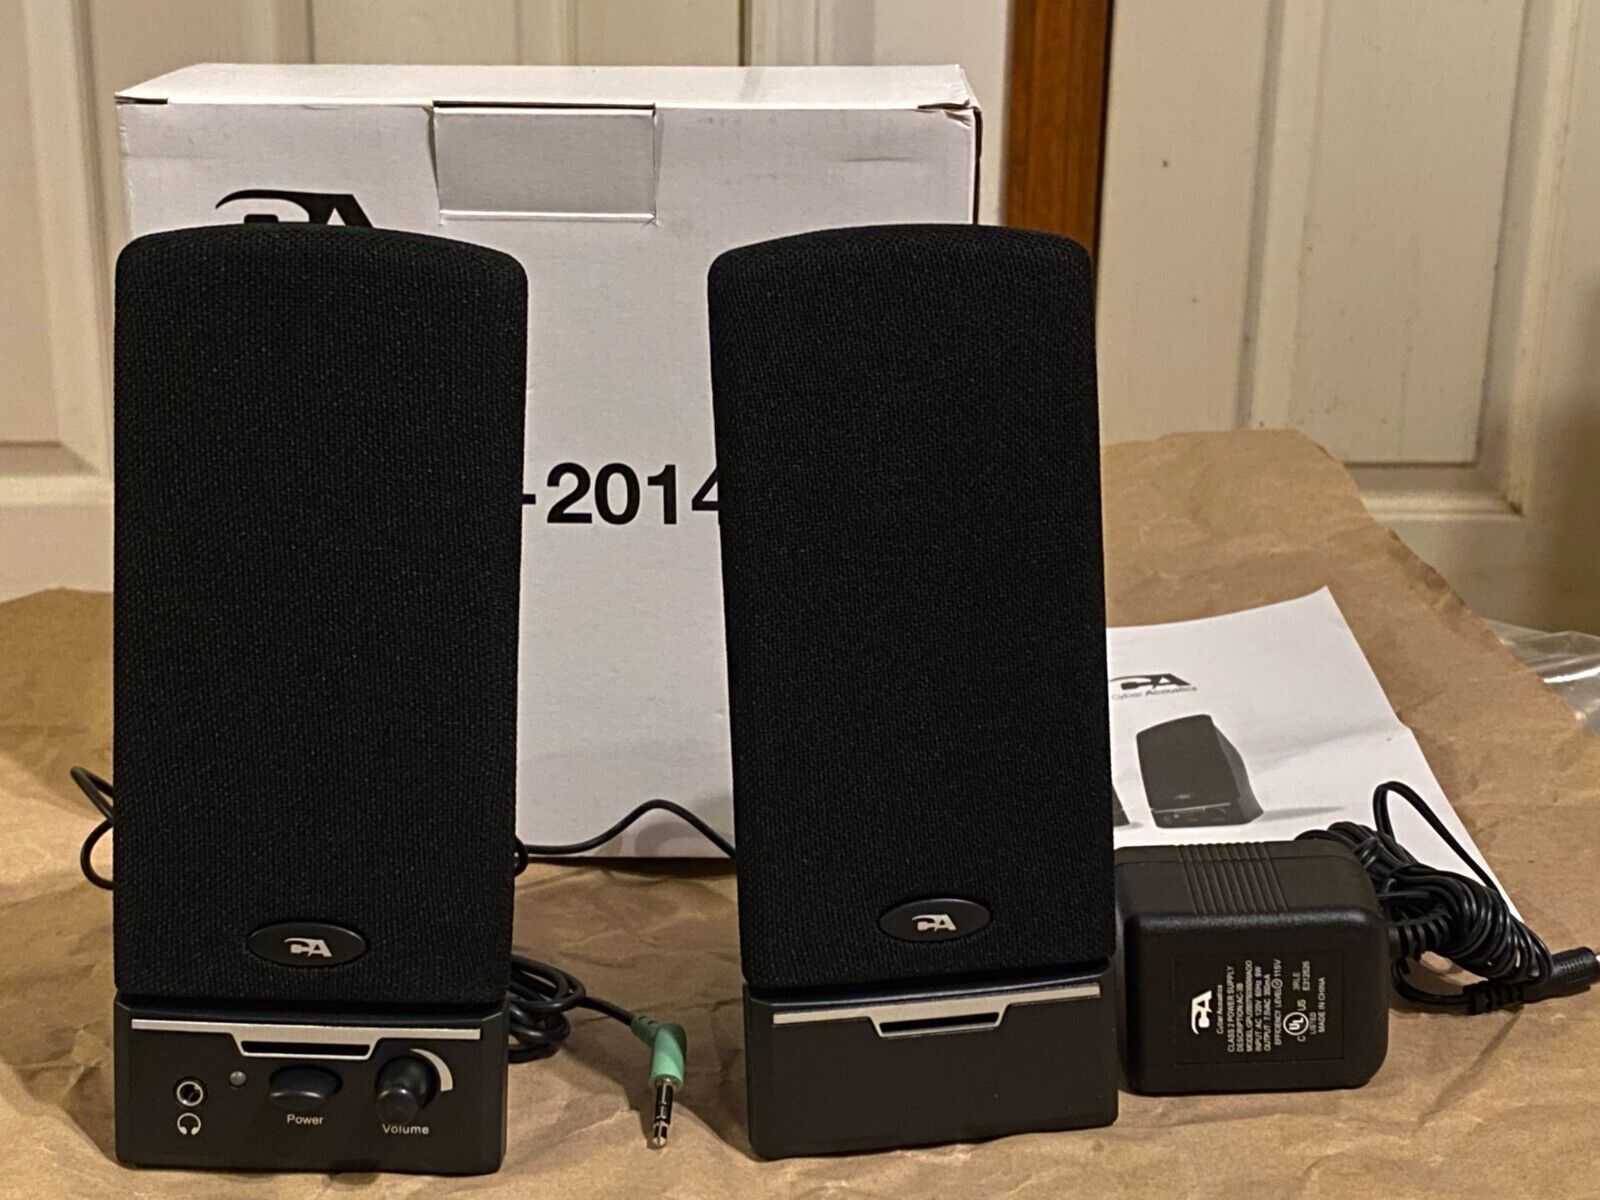 New Pair of Cyber Acoustics CA-2014 Multimedia Speaker 4 Desktop Laptop Computer